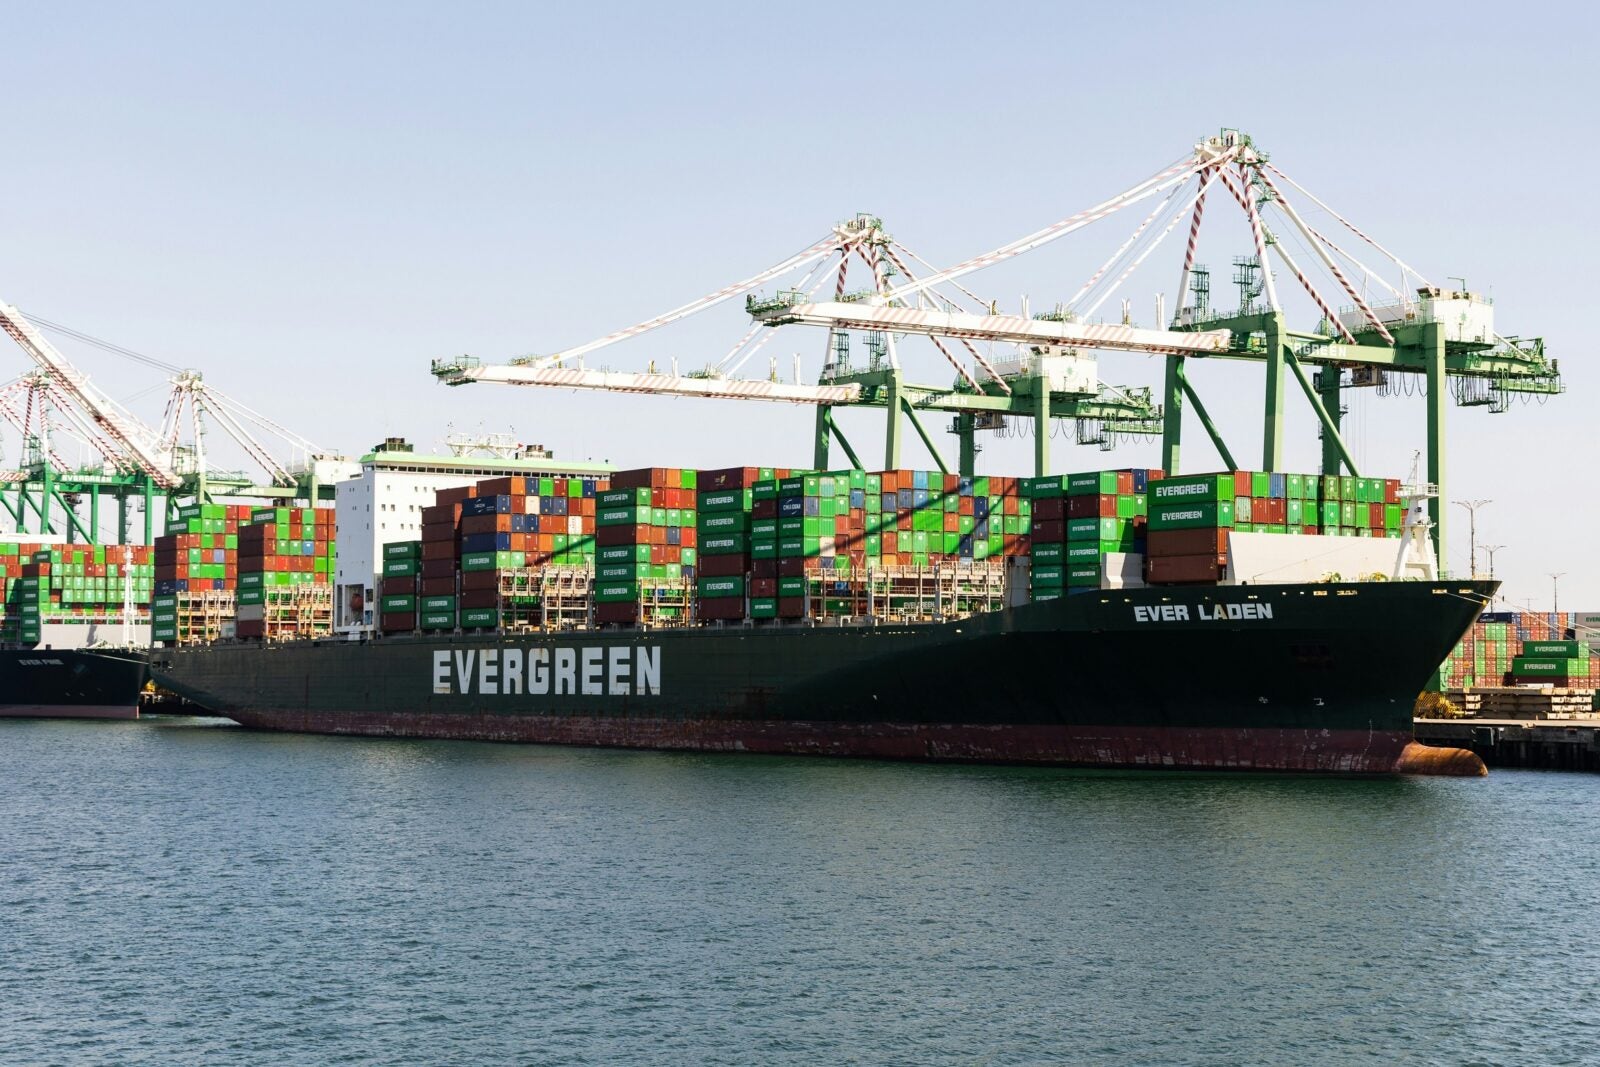 evergreen container at sea
Fotografía de Sven Piper on Unsplash